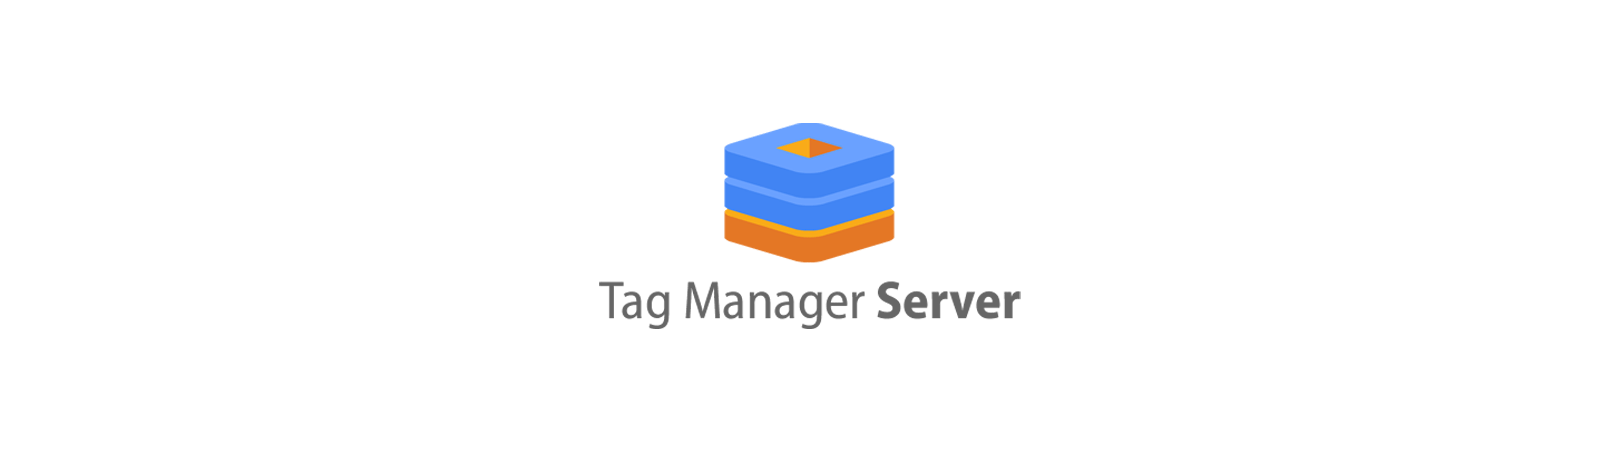 Google Tag Manager Server Side: Pro e Contro